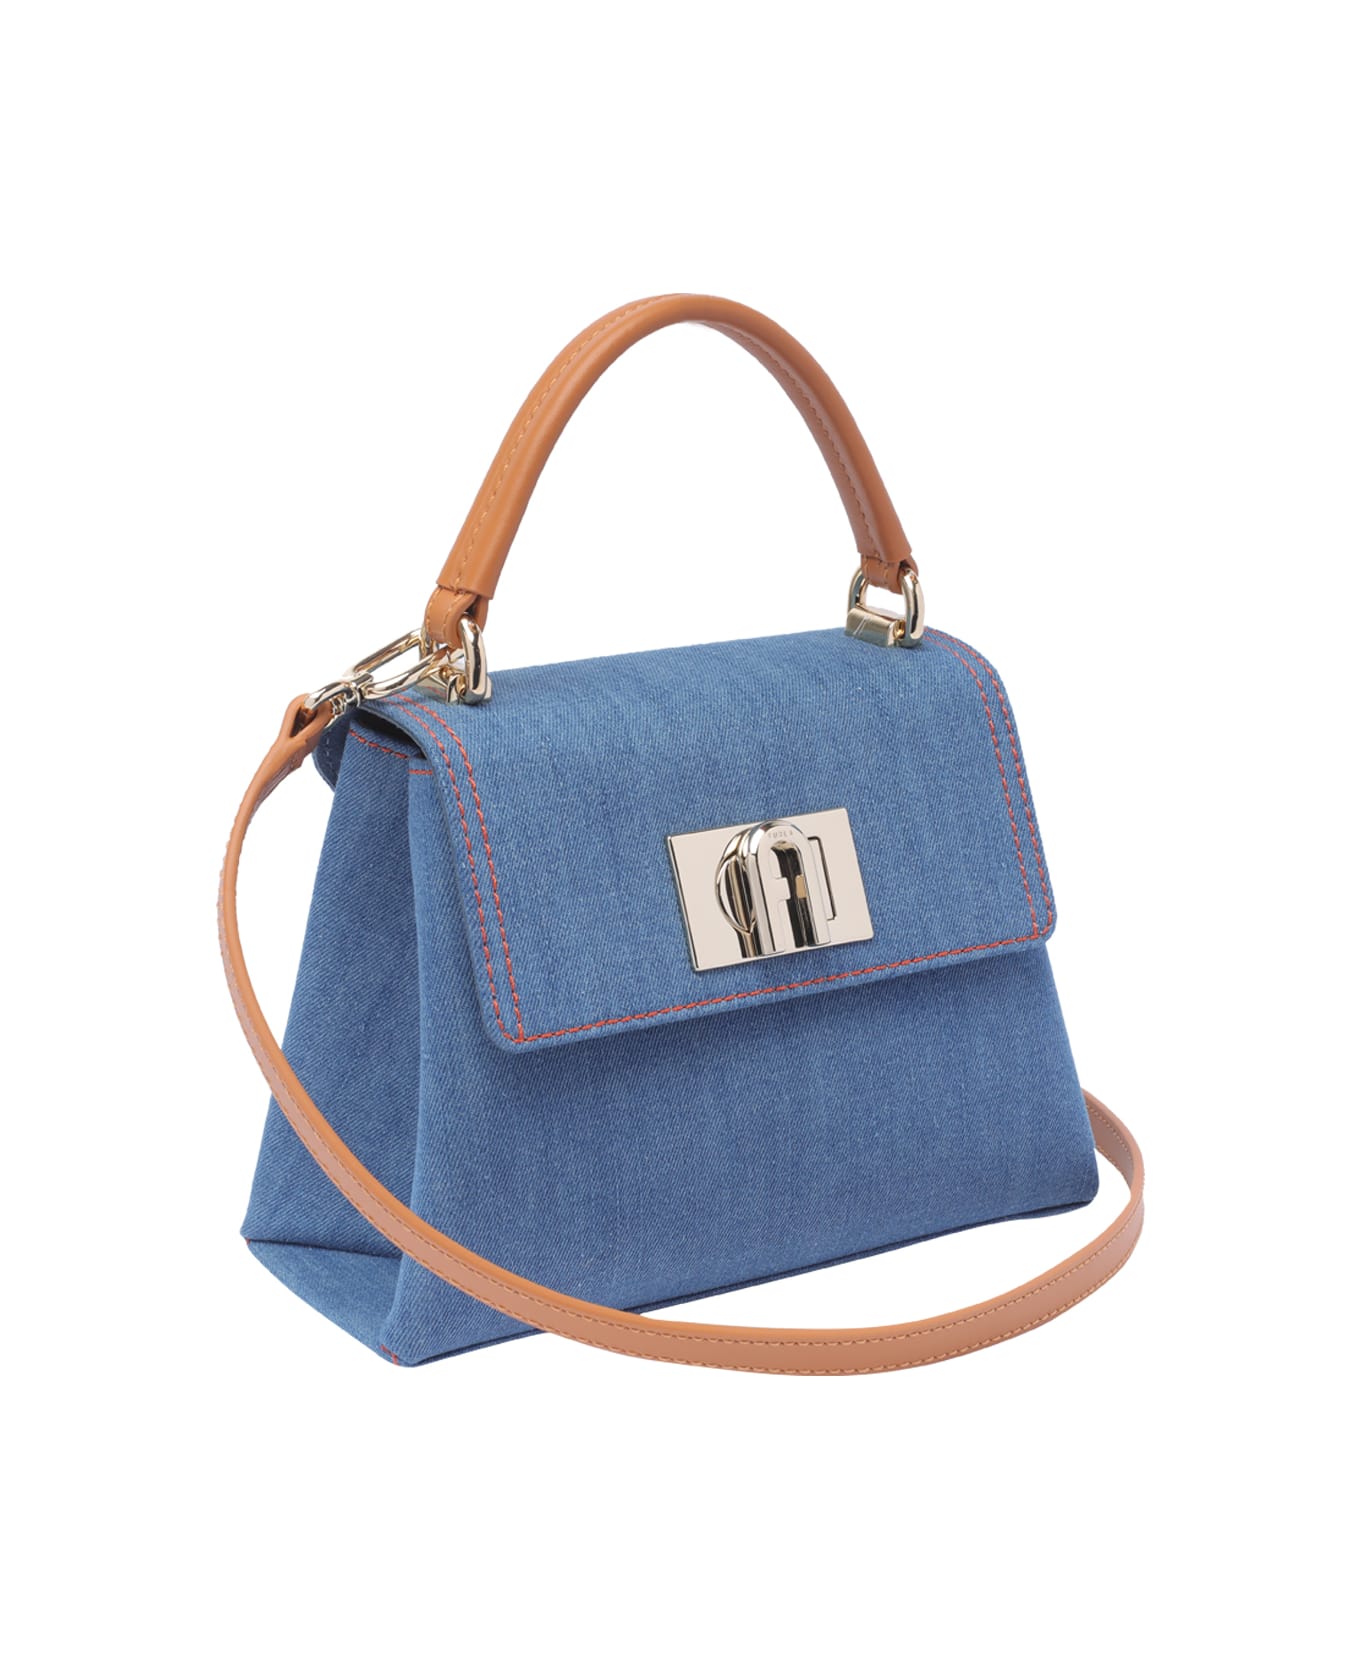 Furla Mini Furla 1927 Handbag - Mediterranean blue